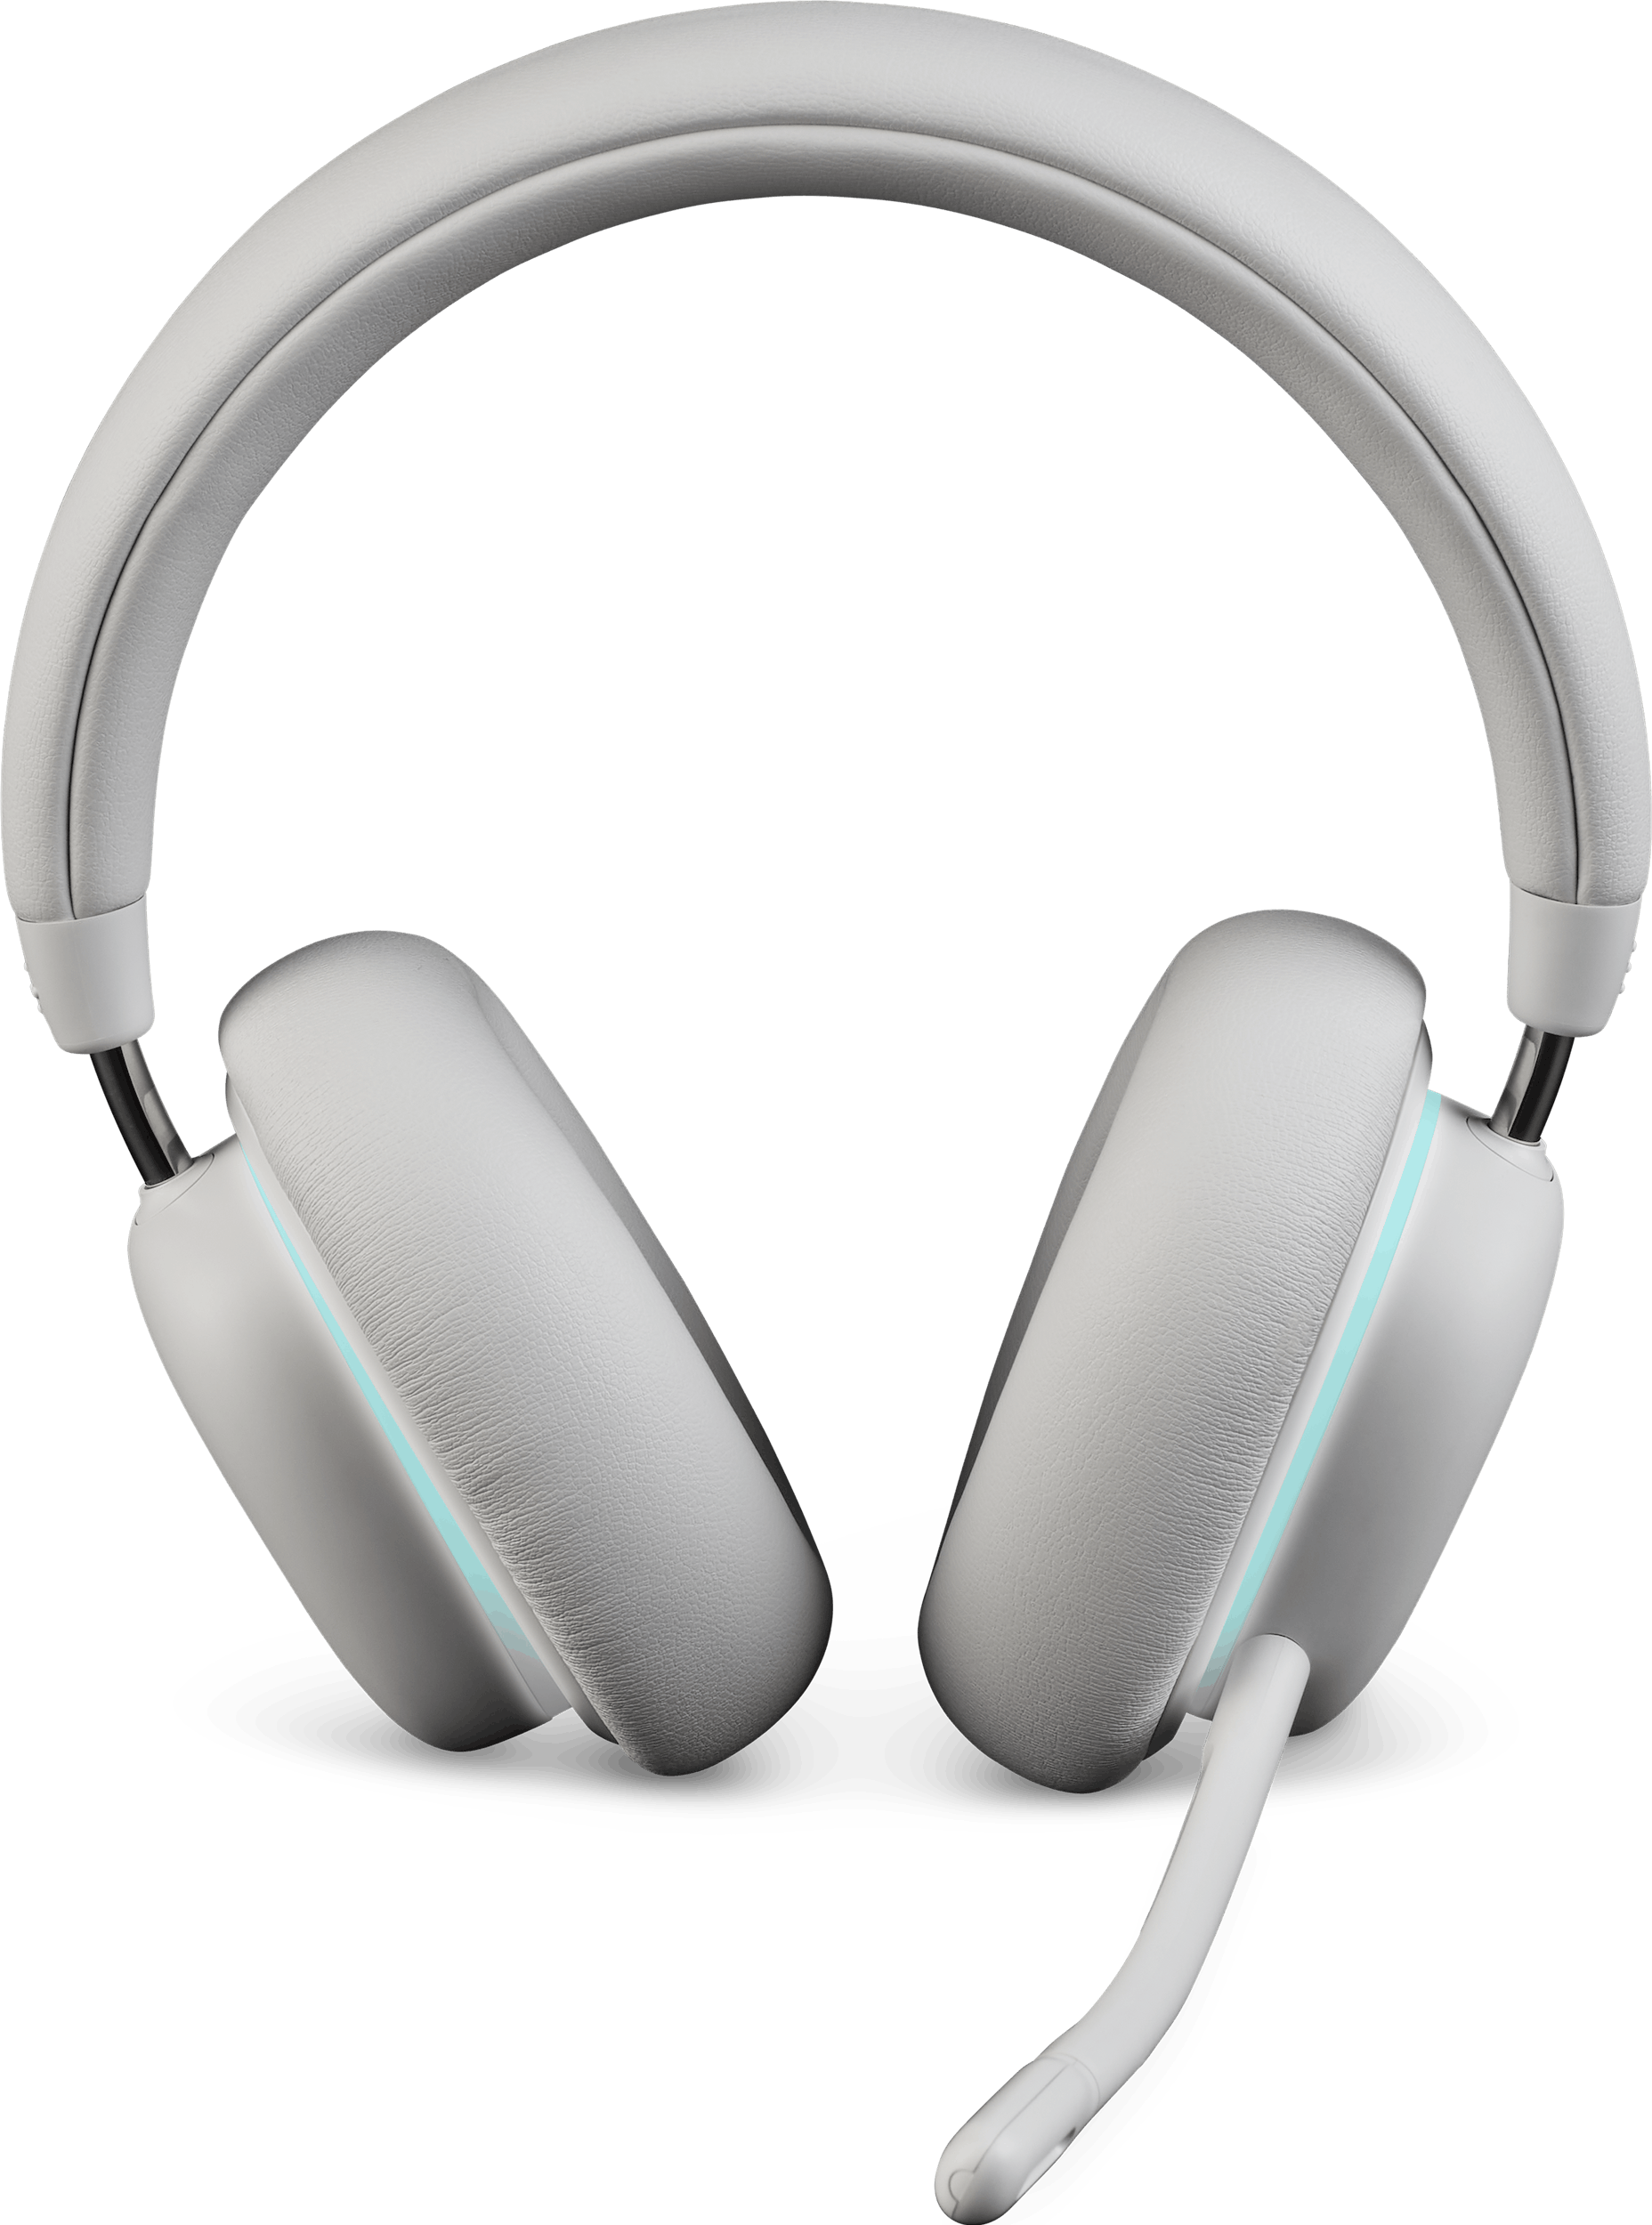 logitech wireless headphones